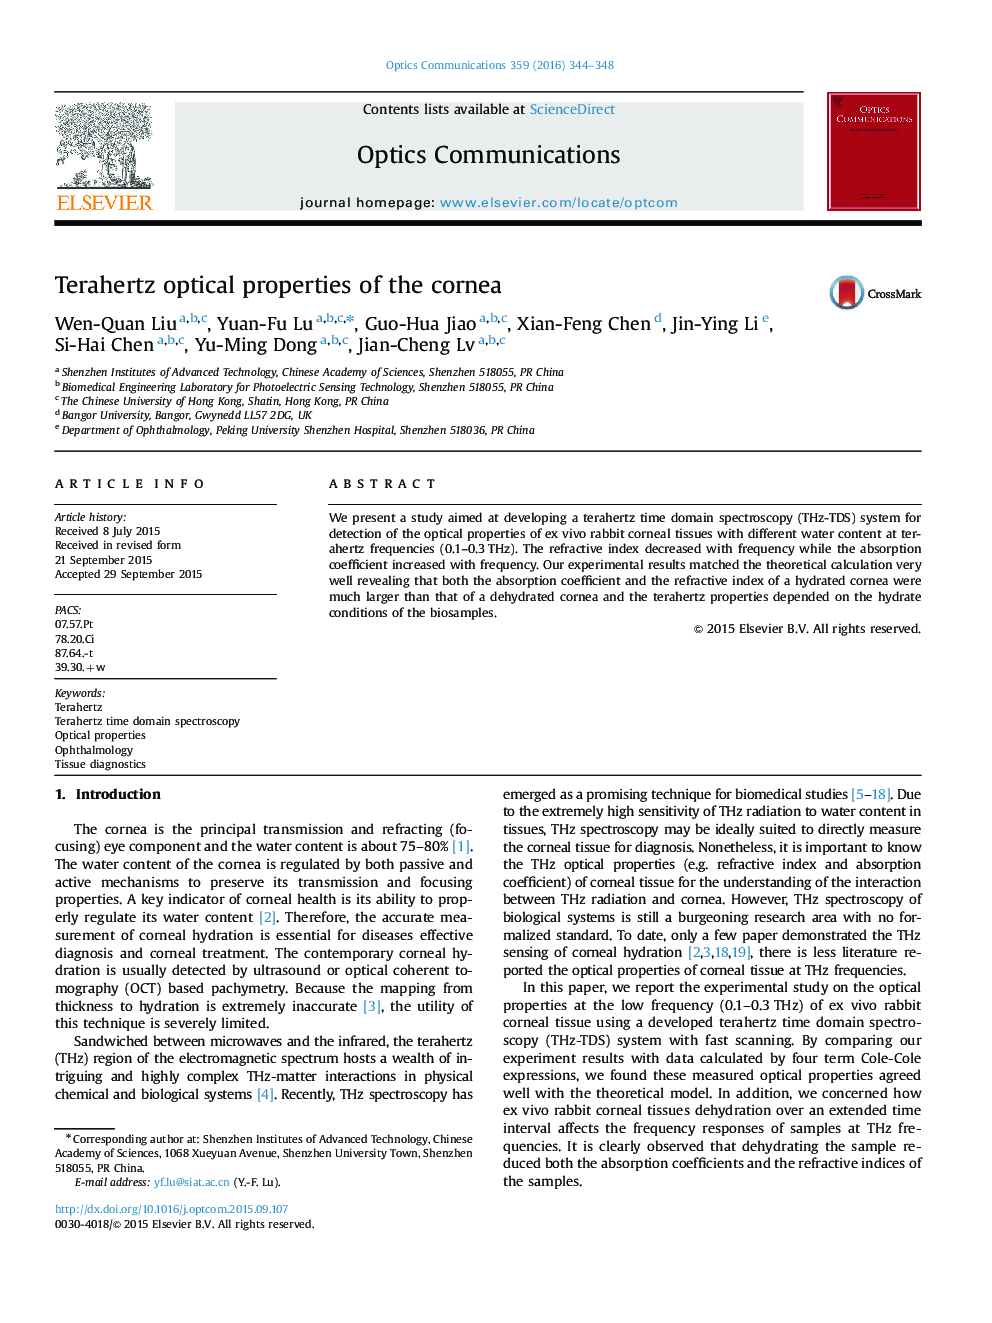 Terahertz optical properties of the cornea